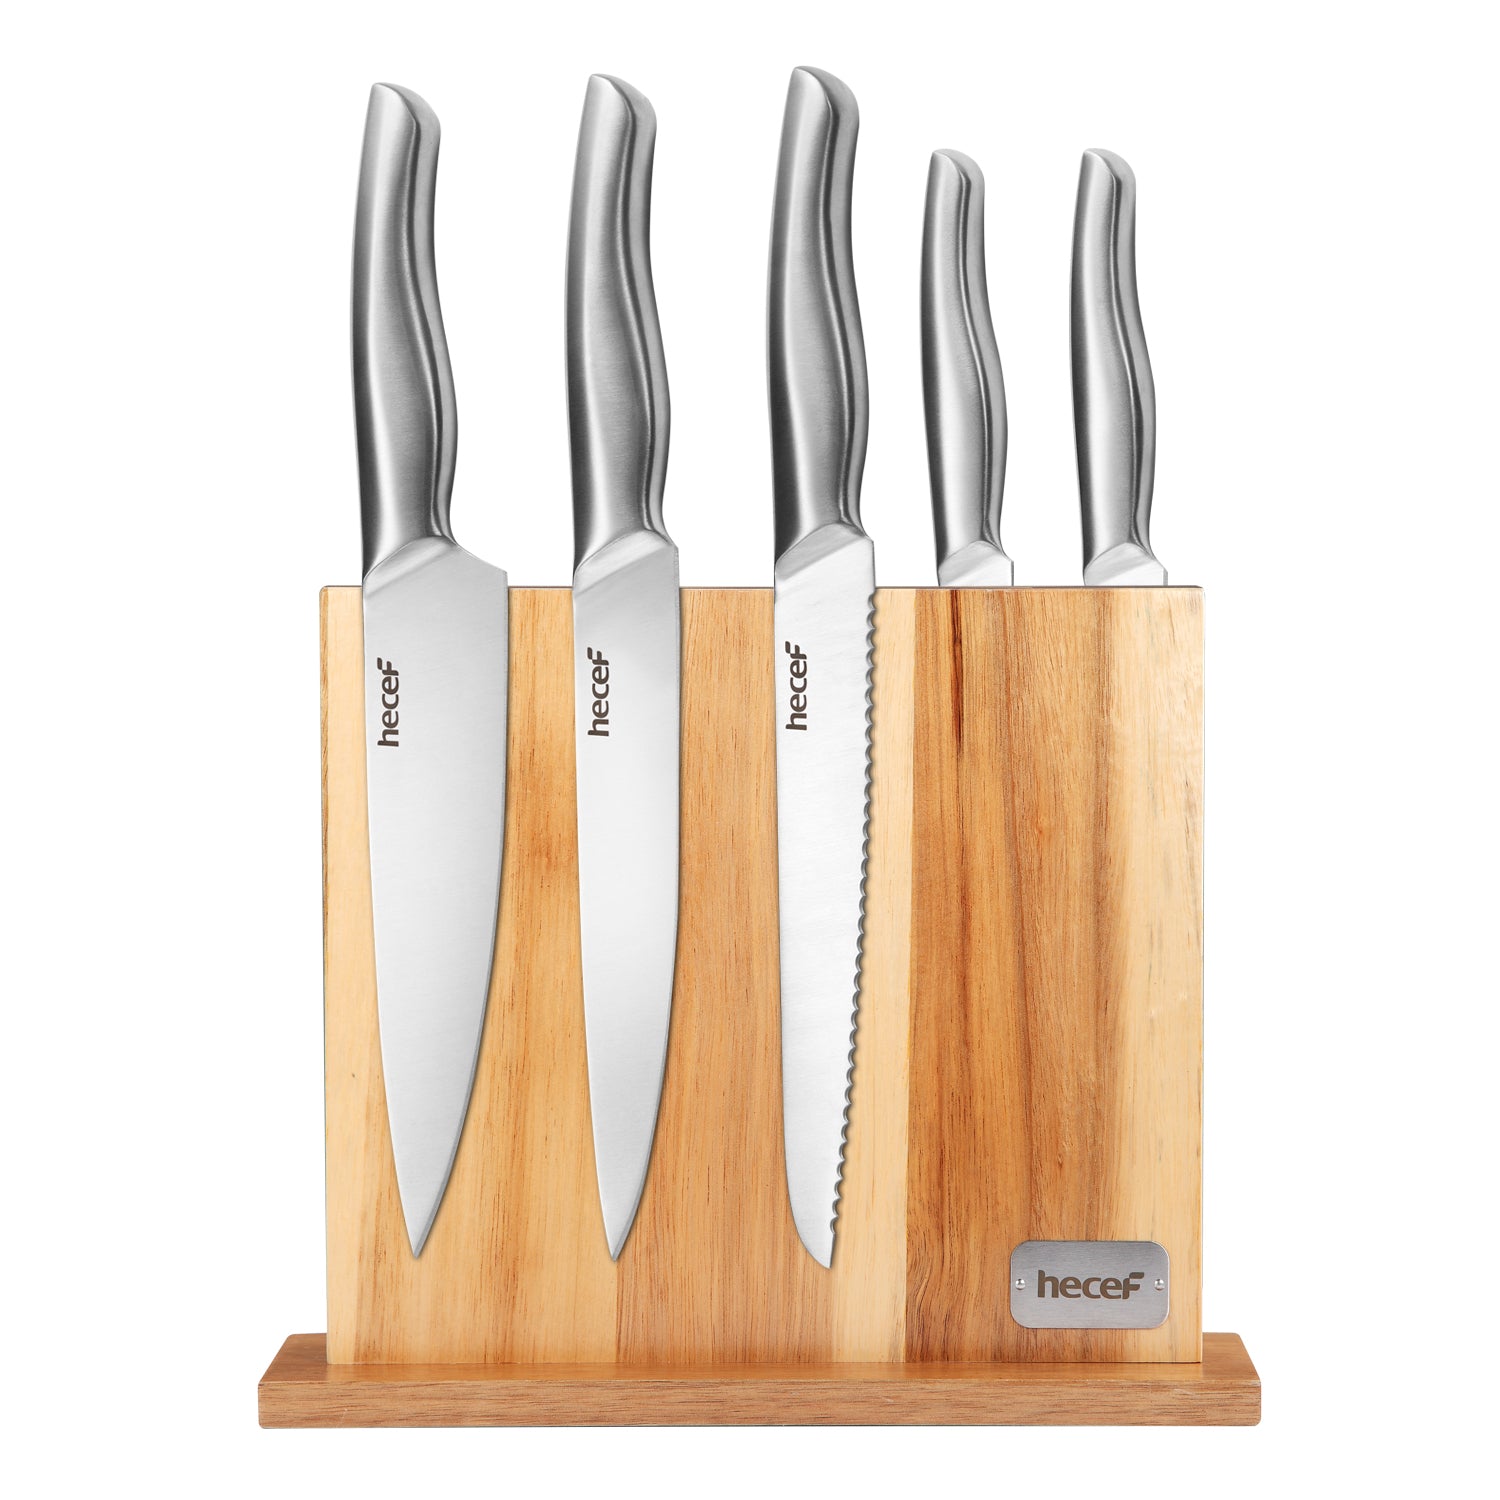 Hecef Kitchen All-Metal Knife Set of 6 with Wooden Magnetic Knife Block - Hecef Kitchen